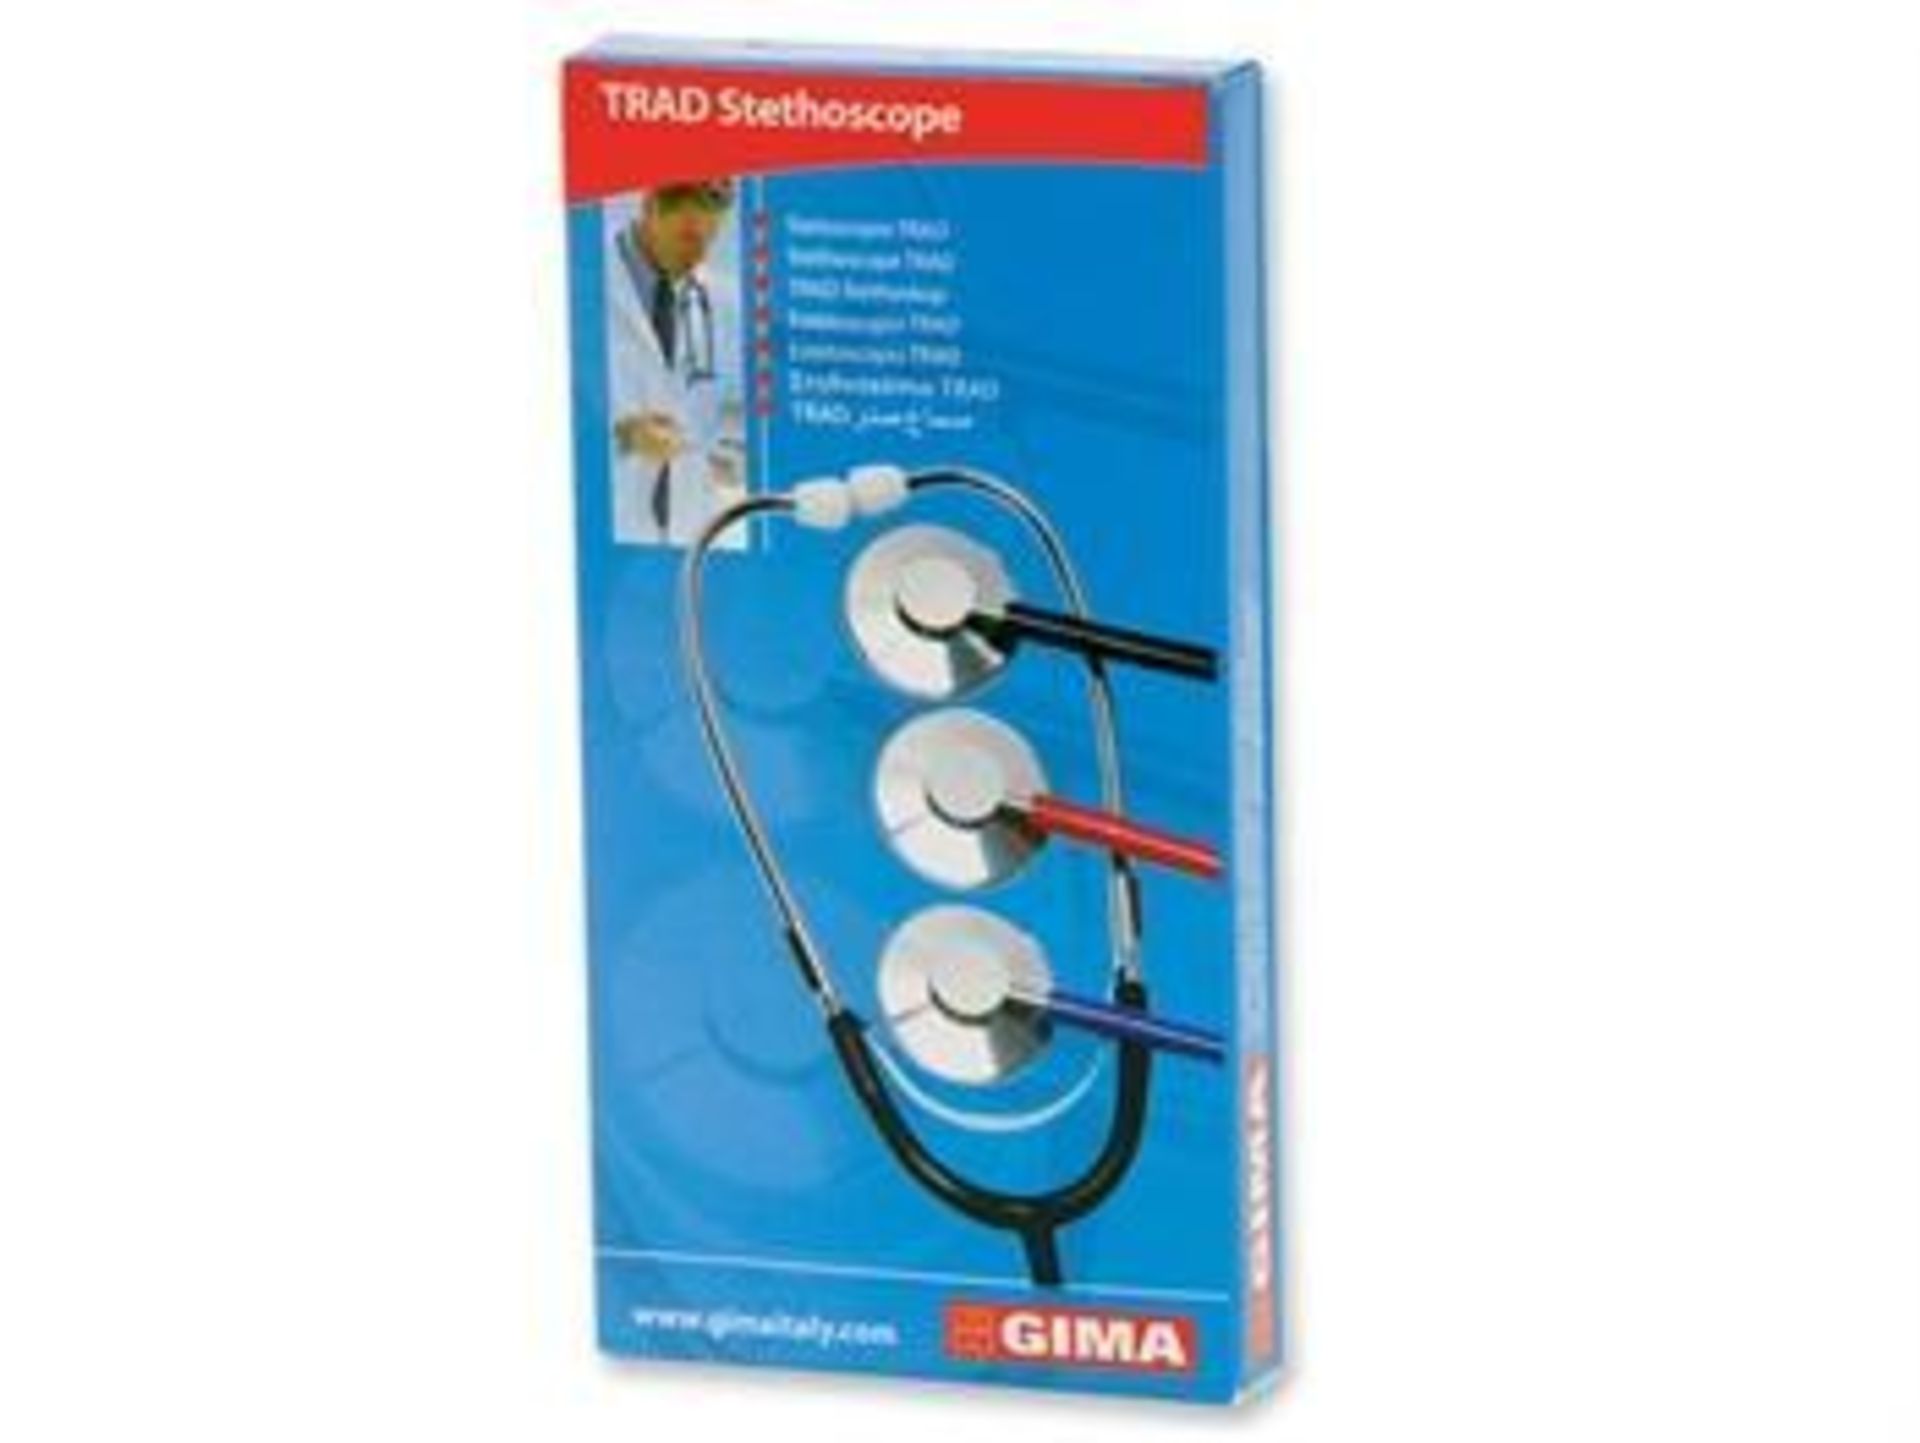 Gima Trad Stethoscope